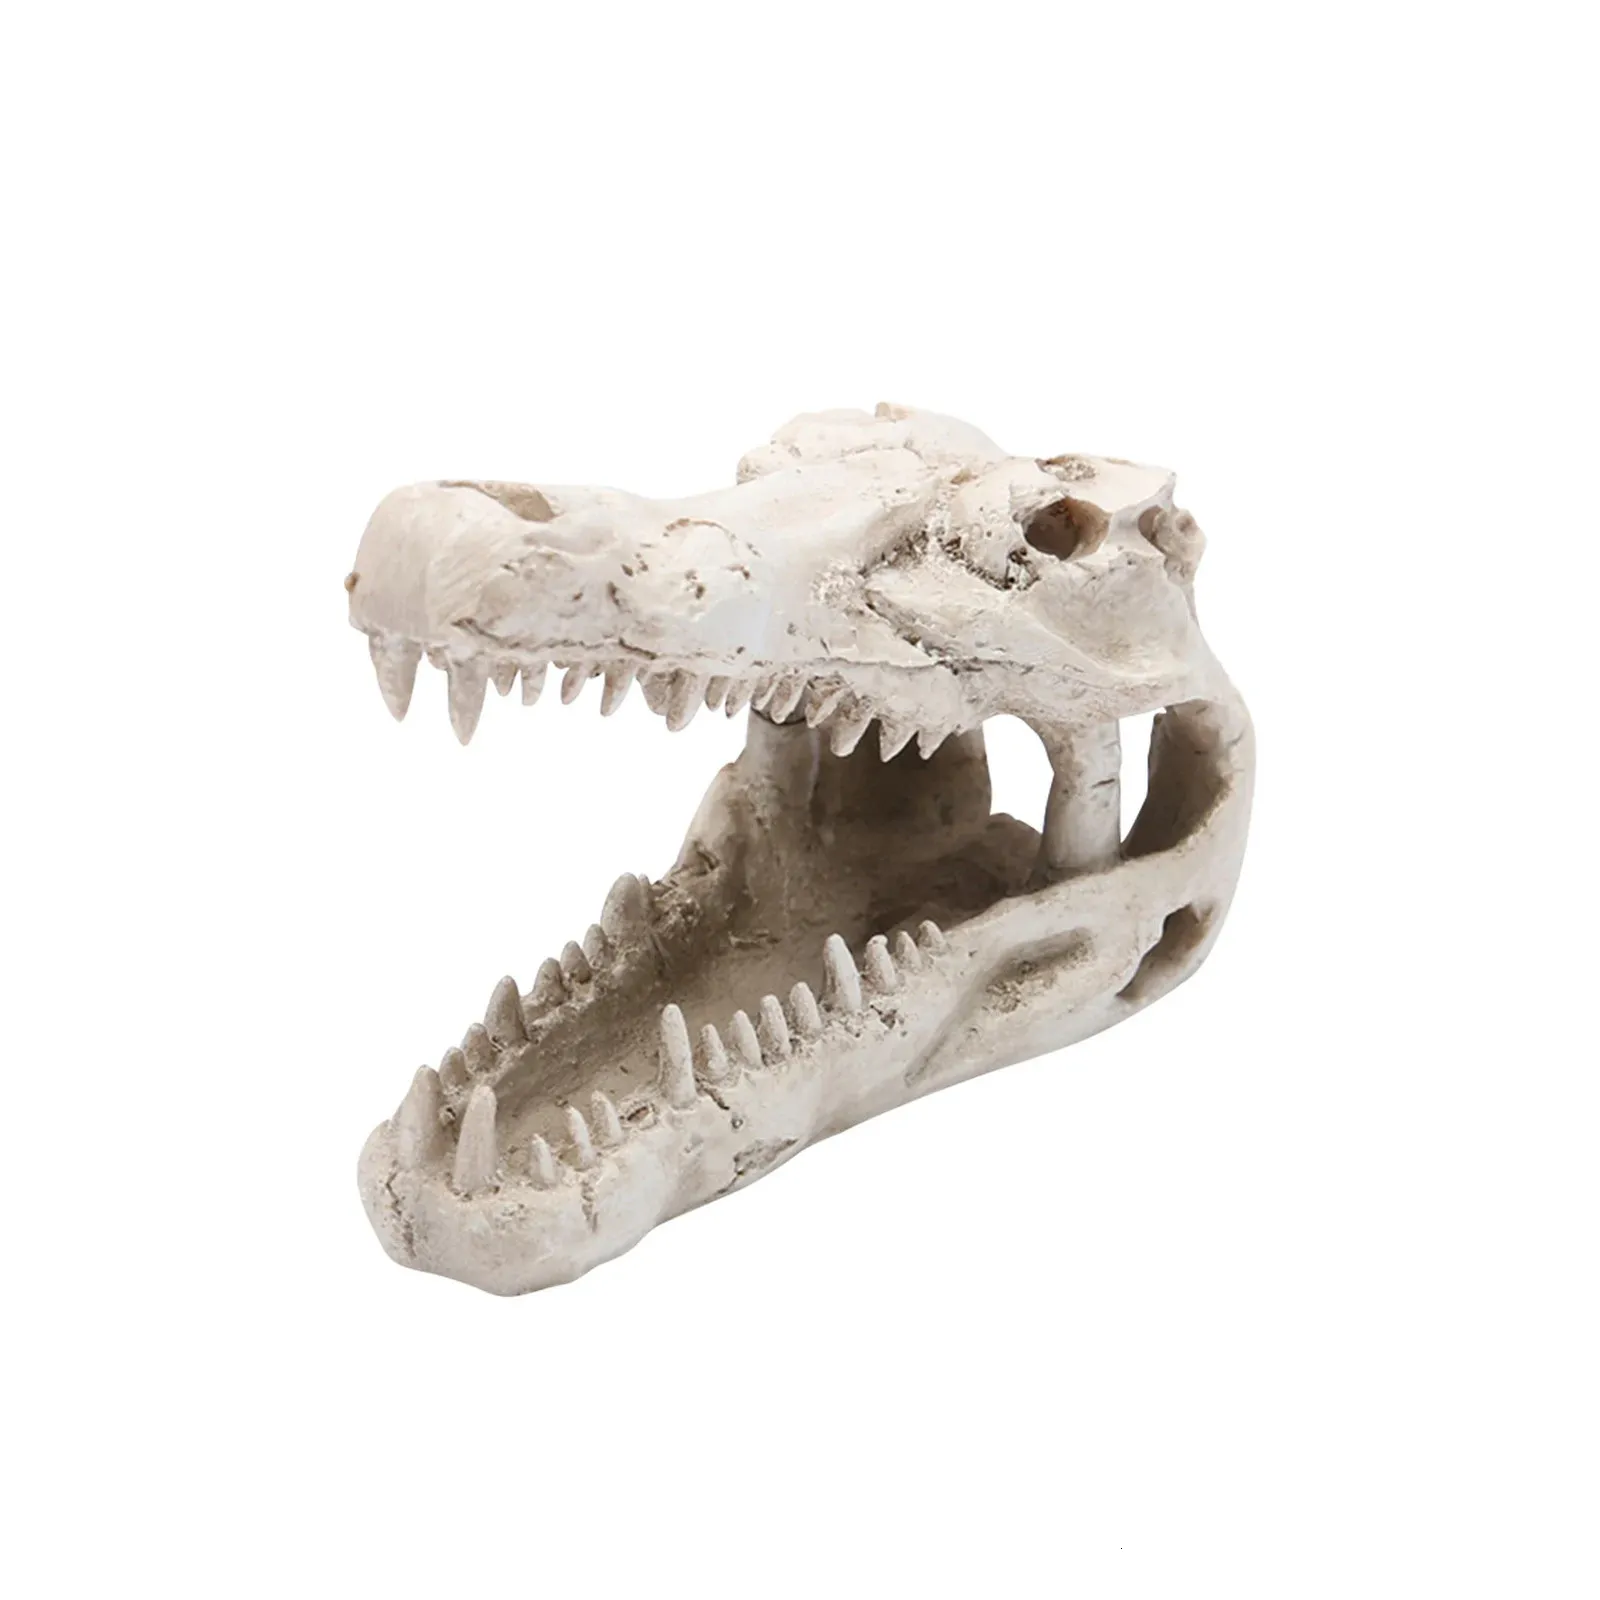 Home Fish Tank Harts Craft Pet Supplies Simulation Reptile Animal Aquarium Ornament Artificial Shelter Skull Gift 240226